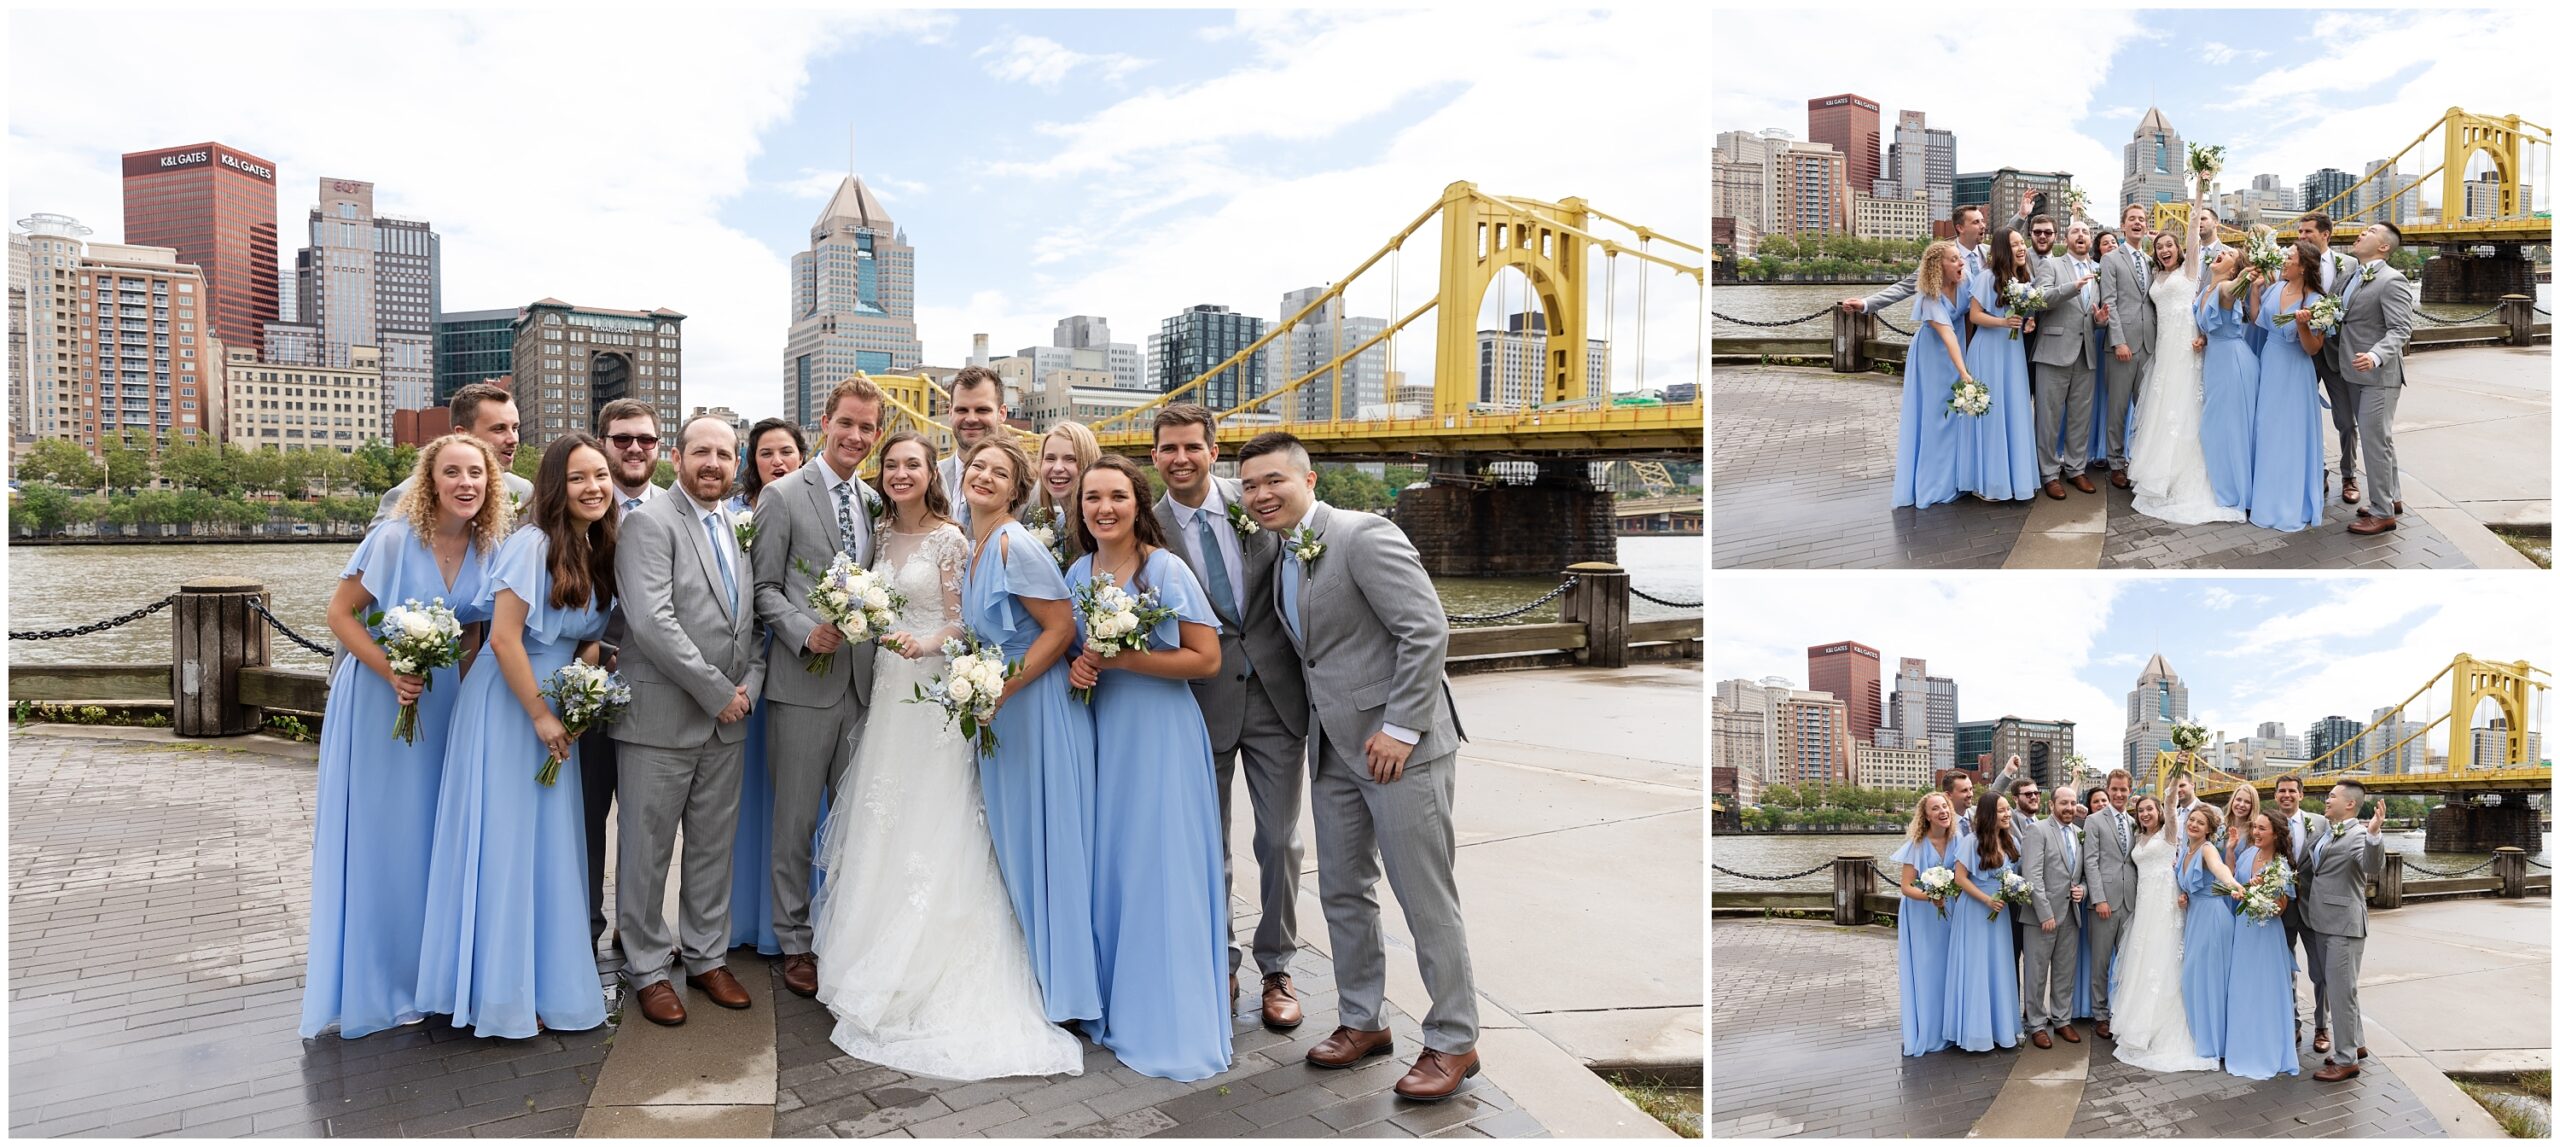 North Shore Riverwalk Pittsburgh Wedding Photos by Pittsburgh Wedding Photographer Catherine Acevedo Photography